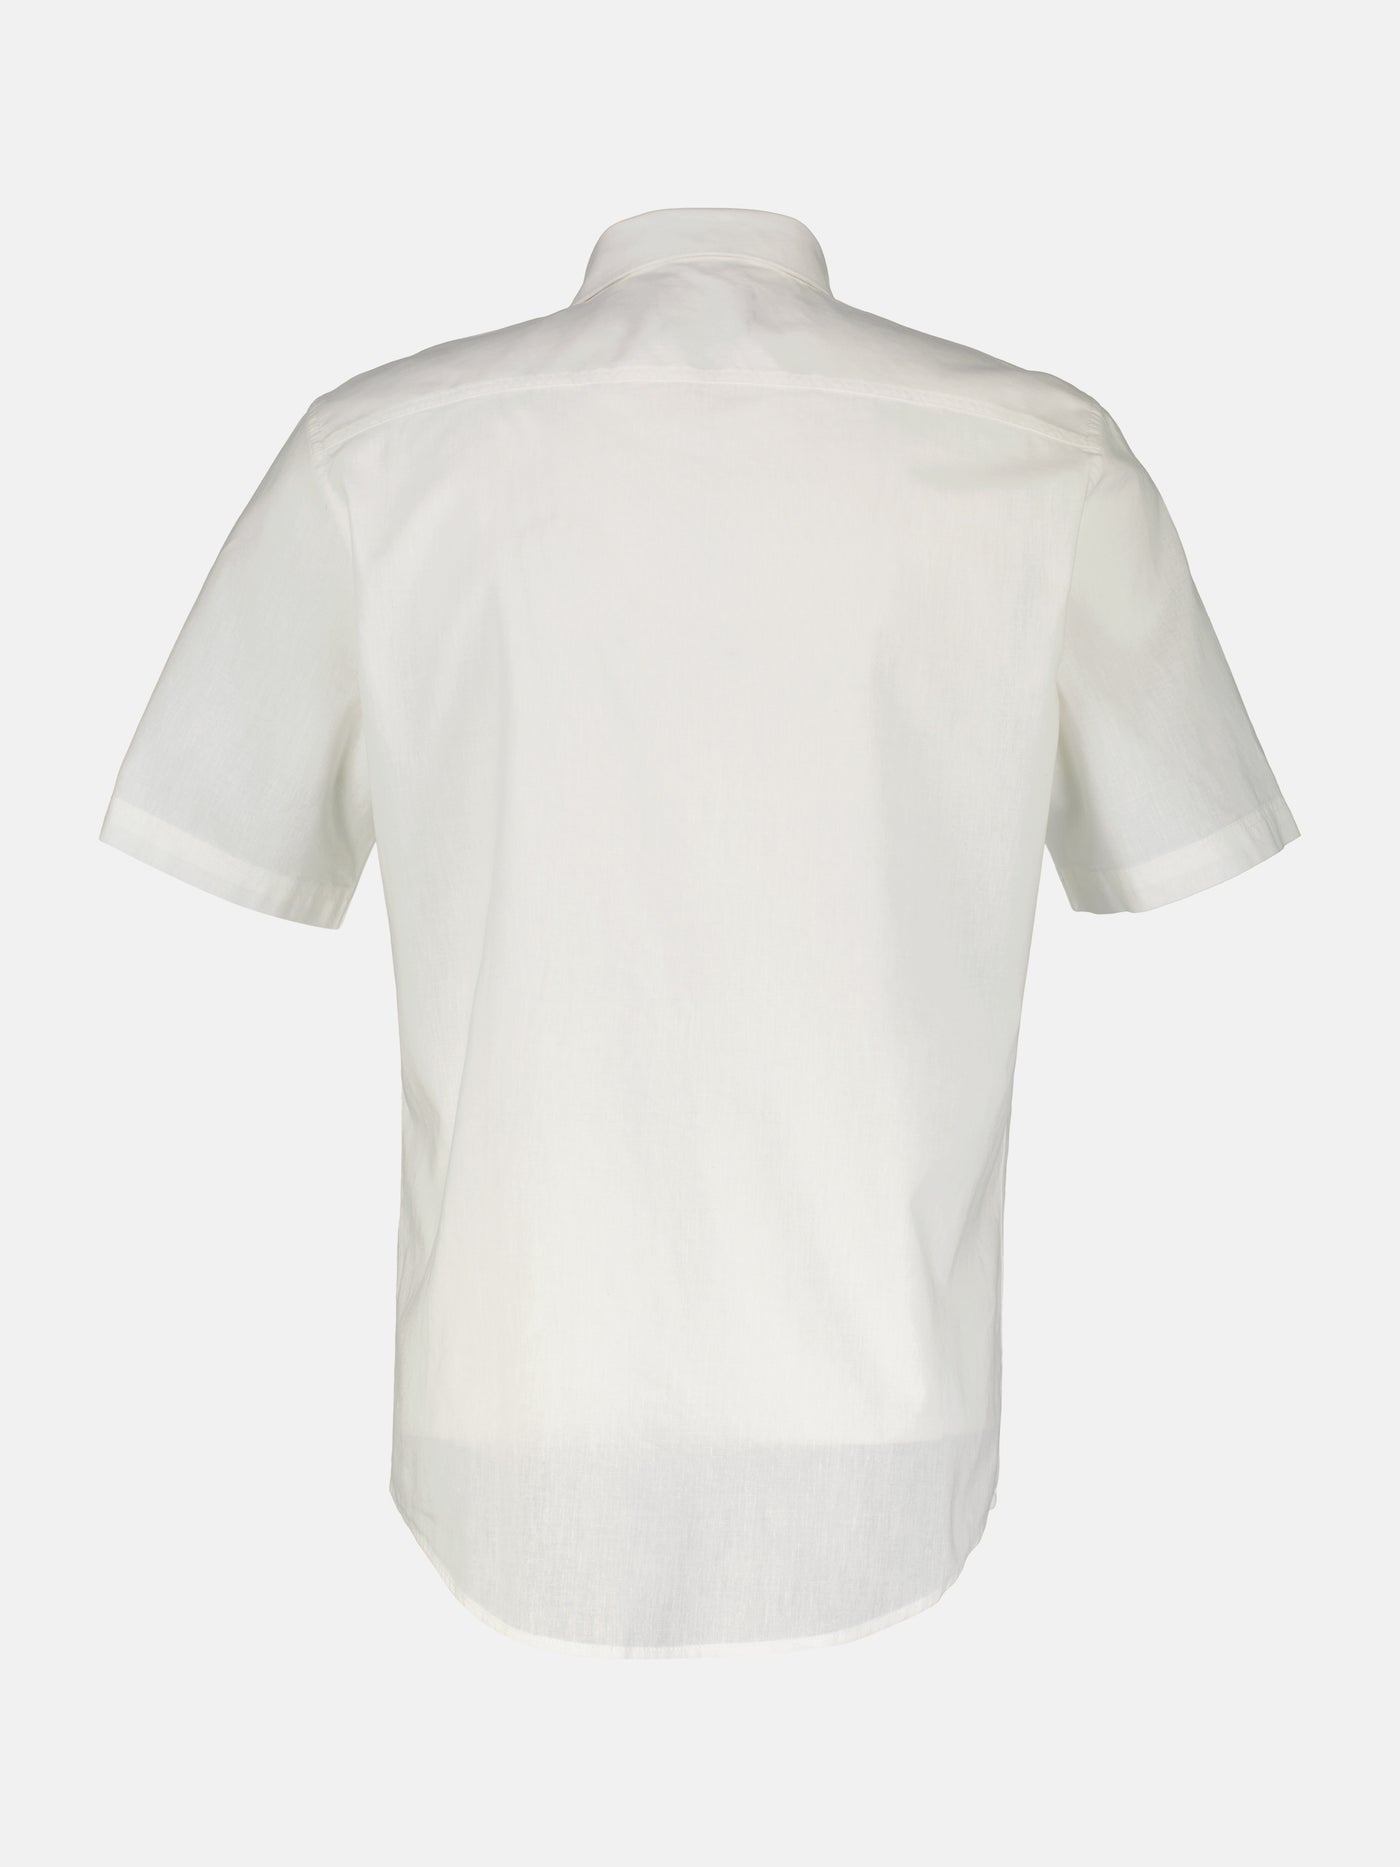 Plain cotton linen shirt